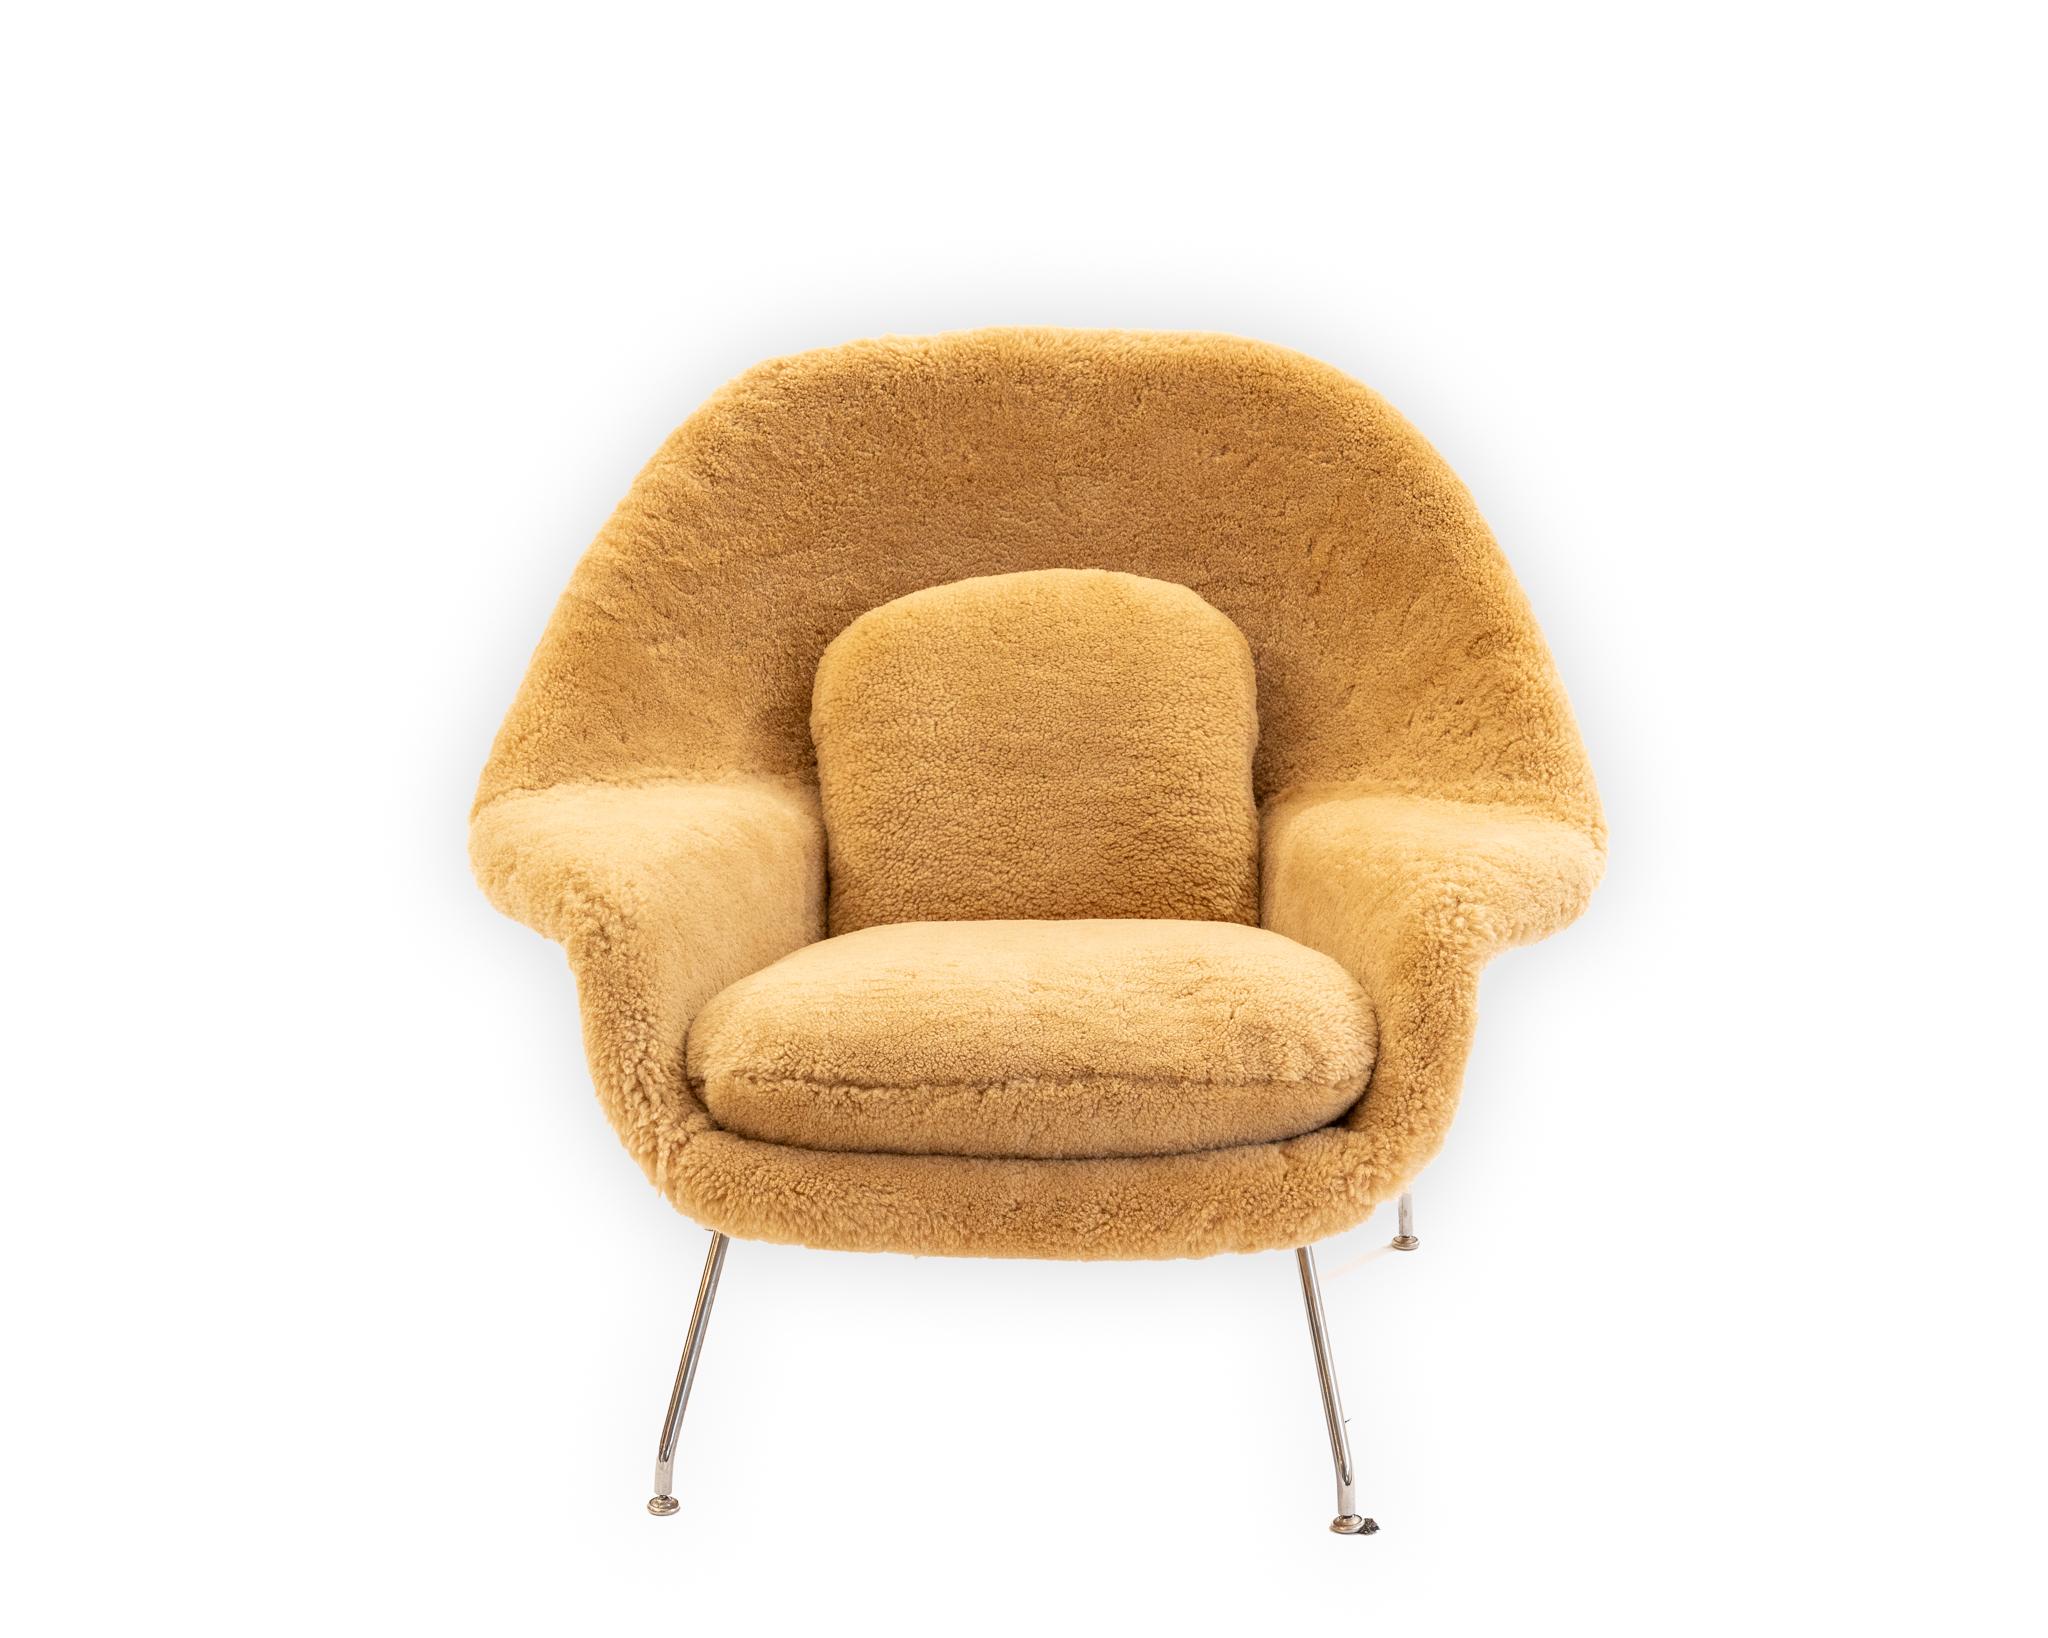 American Eero Saarinen Womb Chair and Ottoman in Golden Teddy Bear Sheepskin For Sale